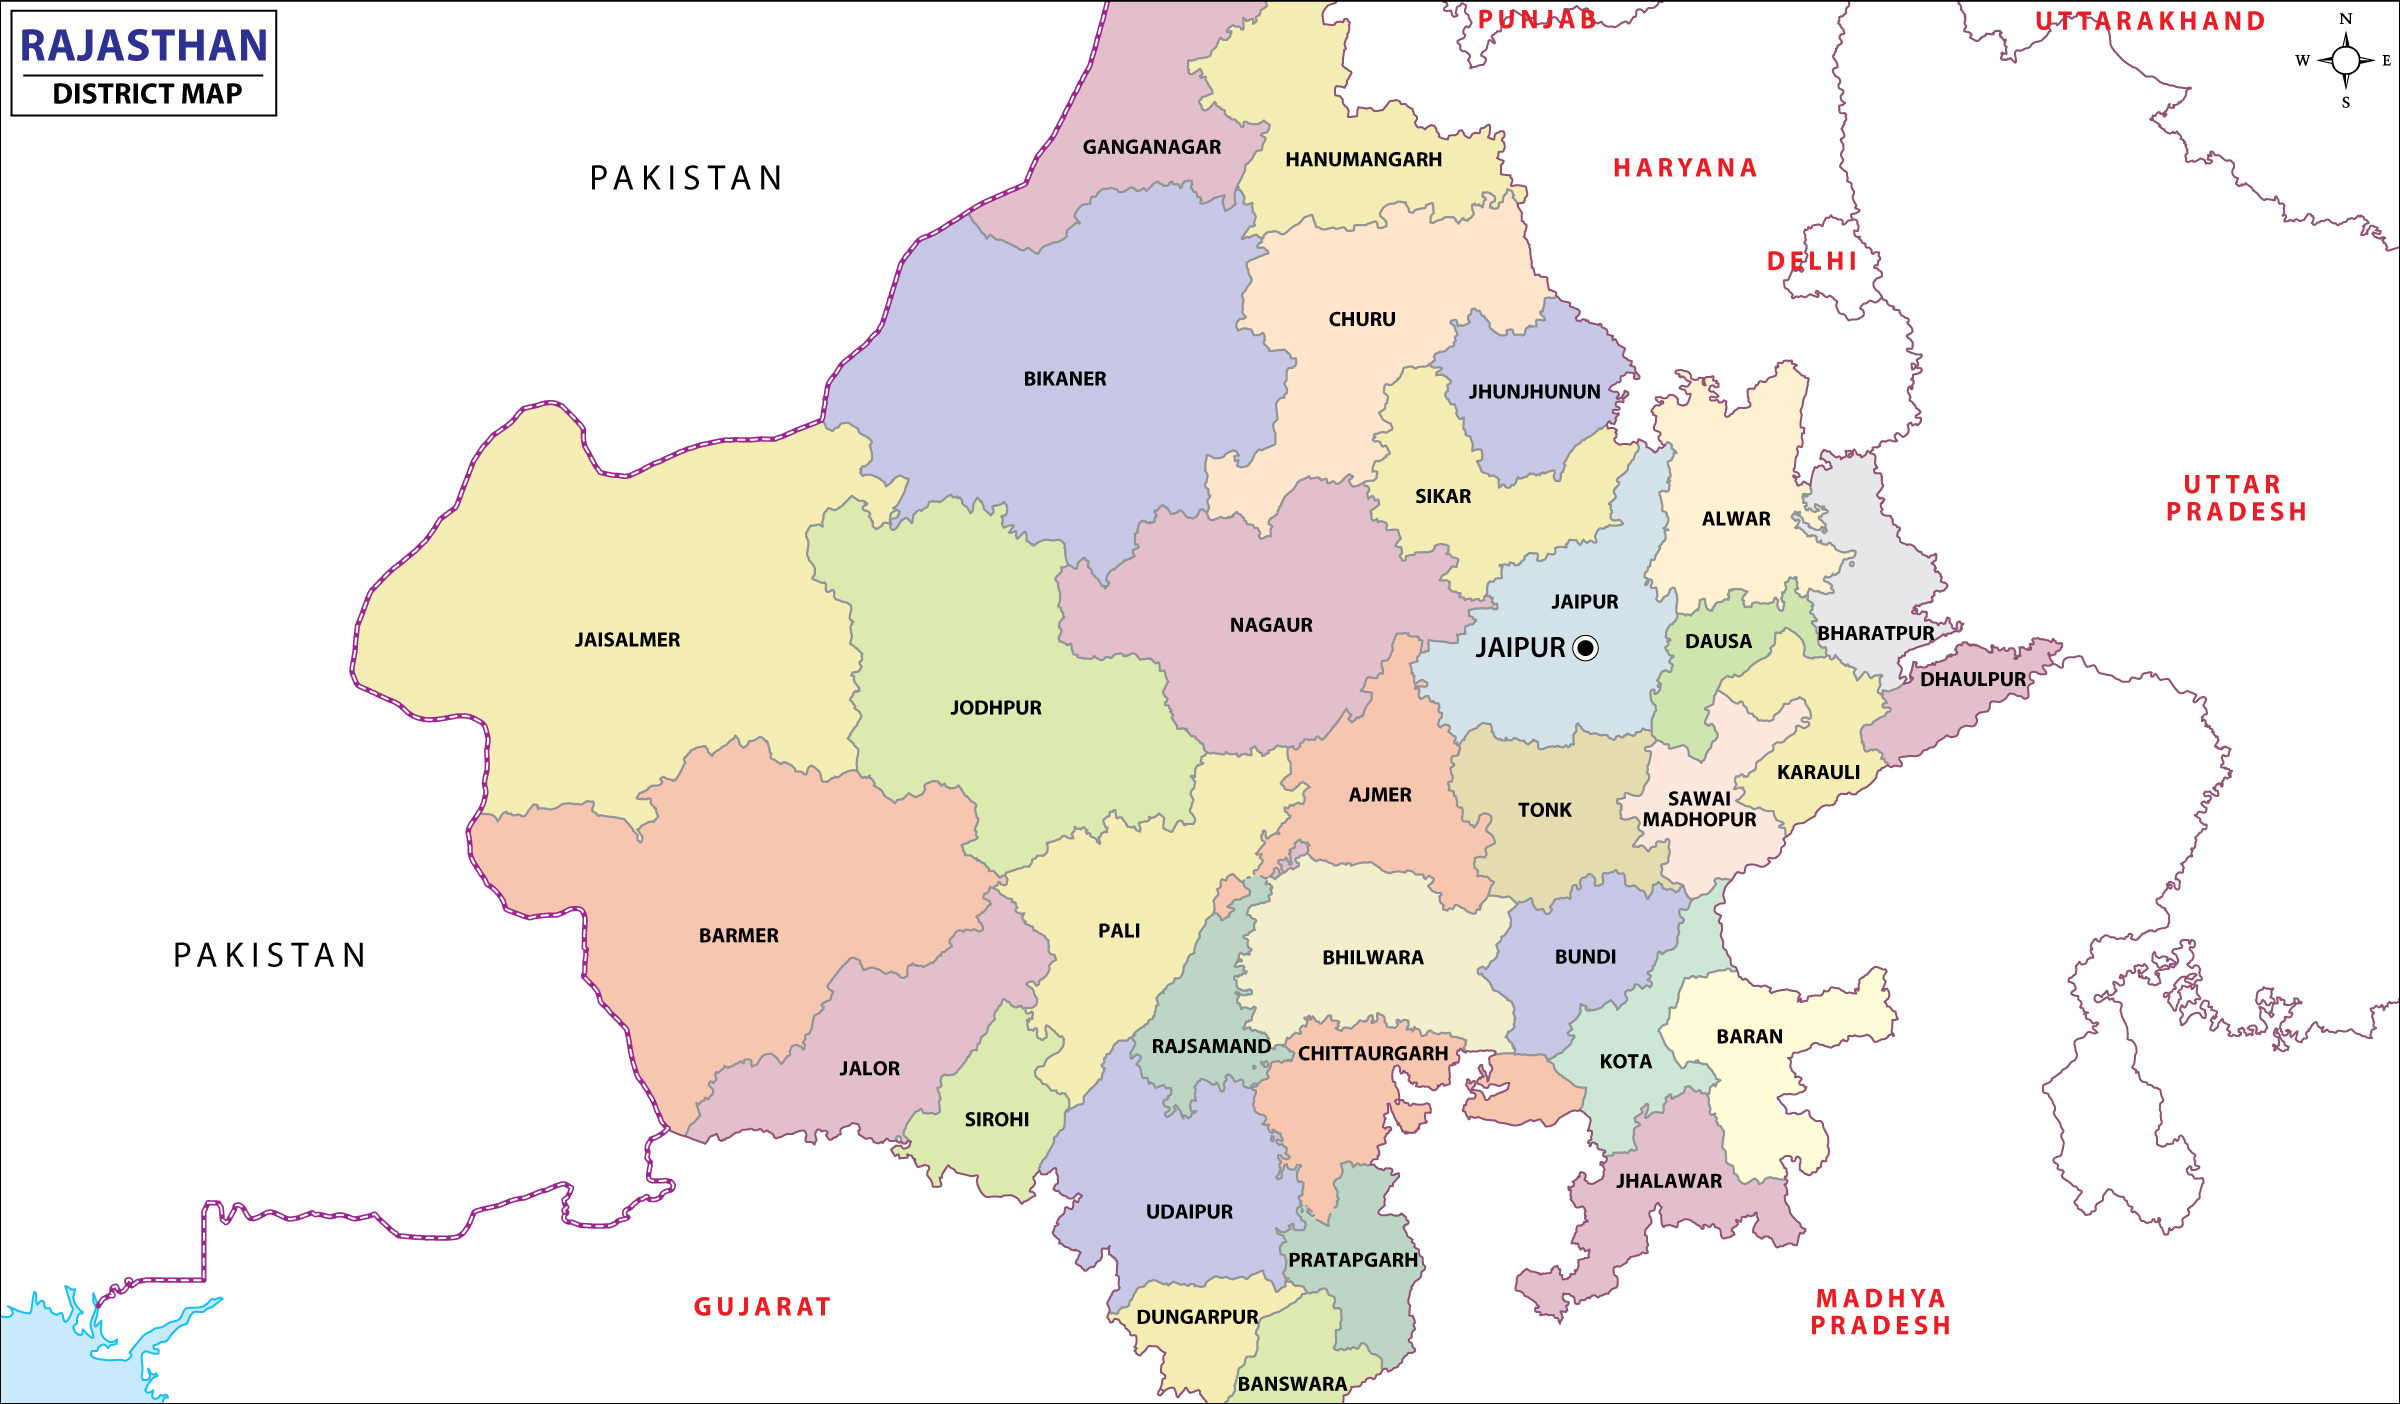 rajasthan-district